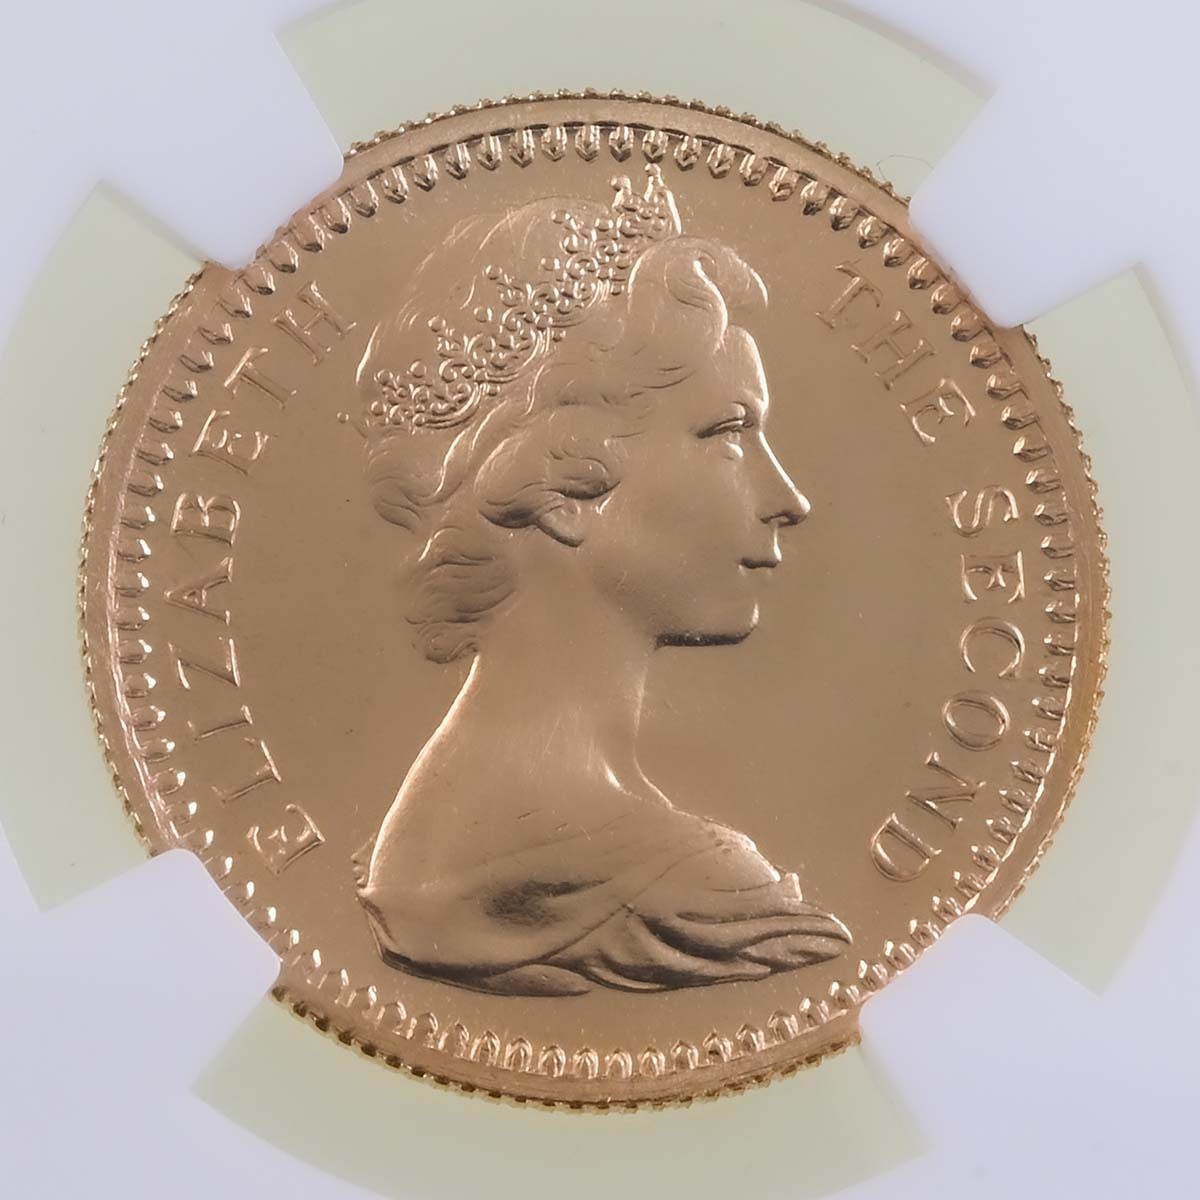 1966 Rhodesia Gold 10 Shillings PF 66 Obverse